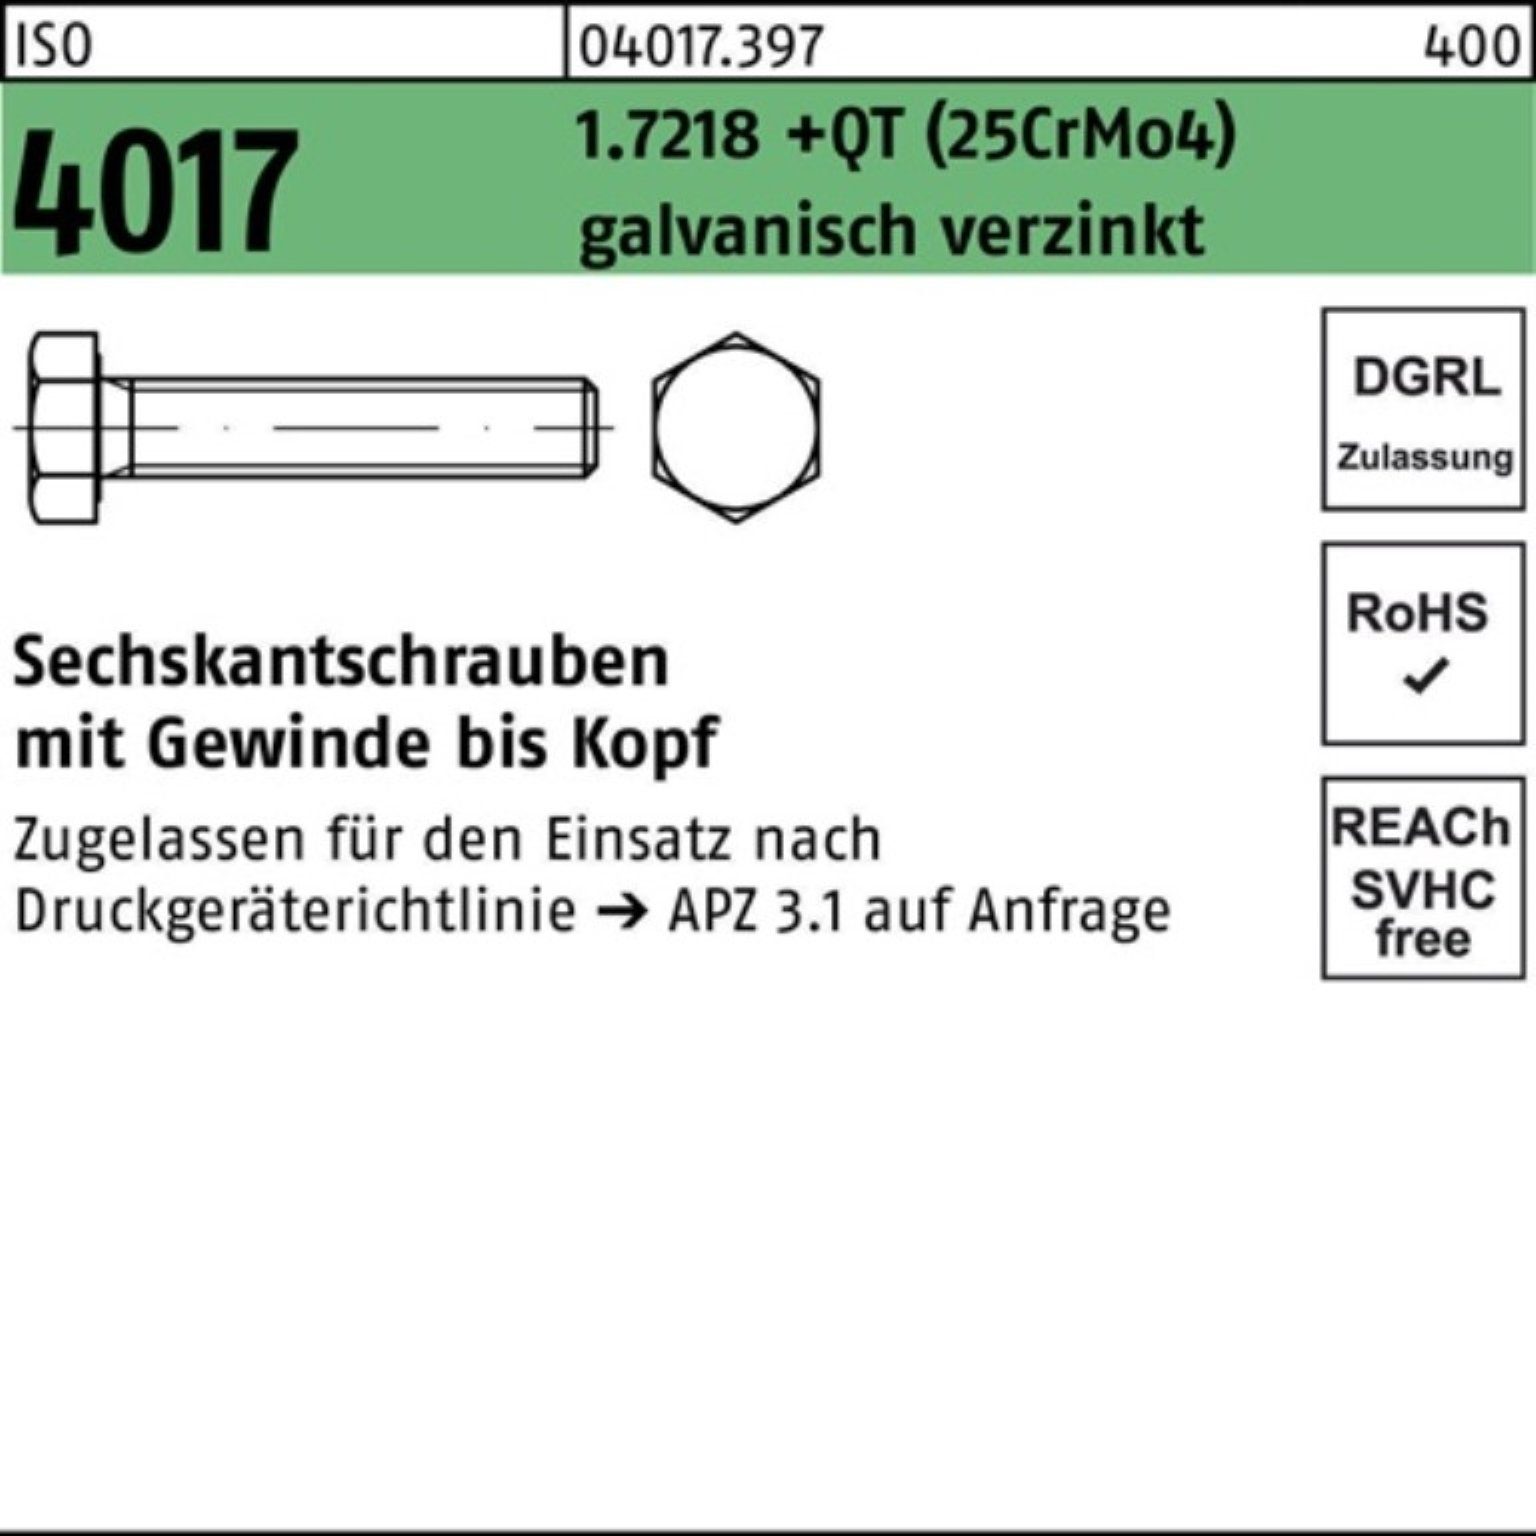 VG M20x45 (25CrMo4) ISO Sechskantschraube Bufab Sechskantschraube 100er +QT 1.7218 Pack 4017 g